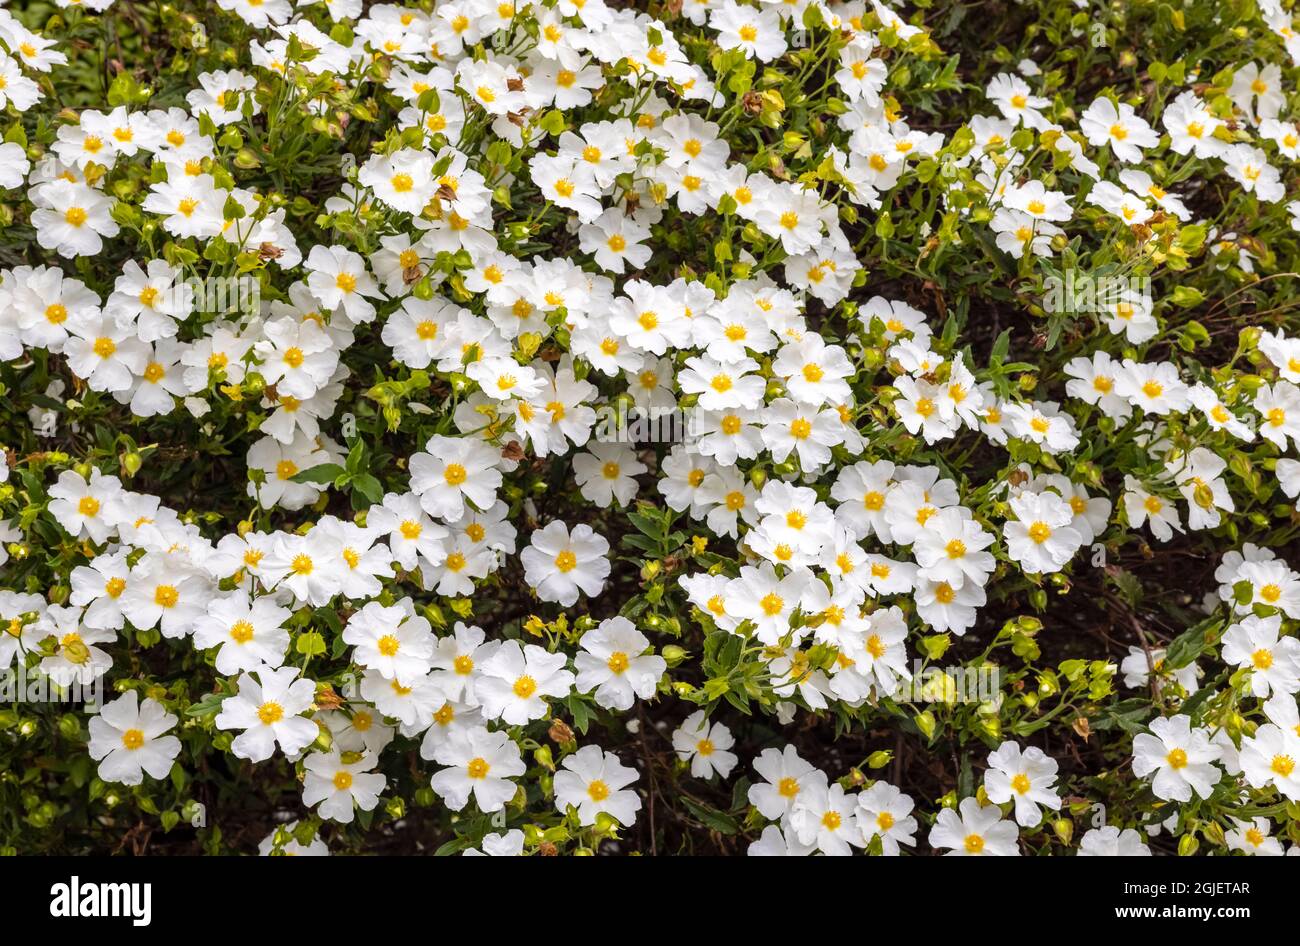 Cistus Salviifolius also sage-leaved rock-rose, salvia cistus or Gallipoli rose, a bushy shrub with inflorescences of round flowers with white petals. Stock Photo